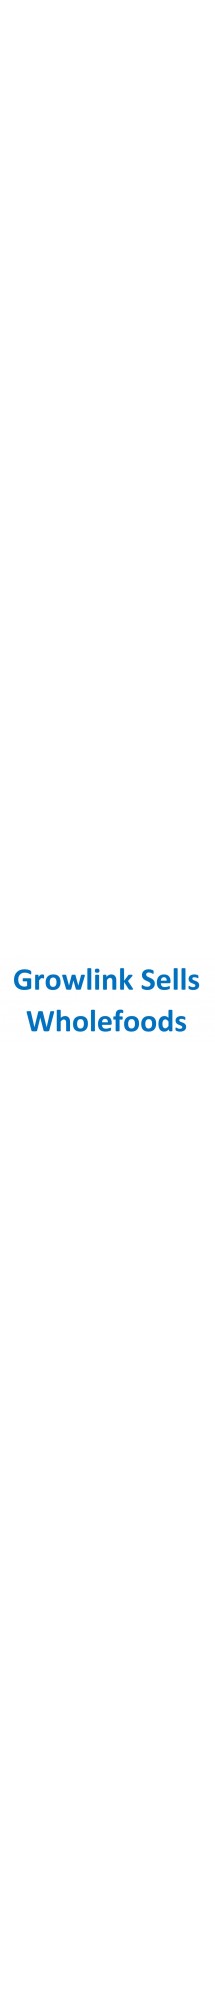 Growlink Sells Wholefoods